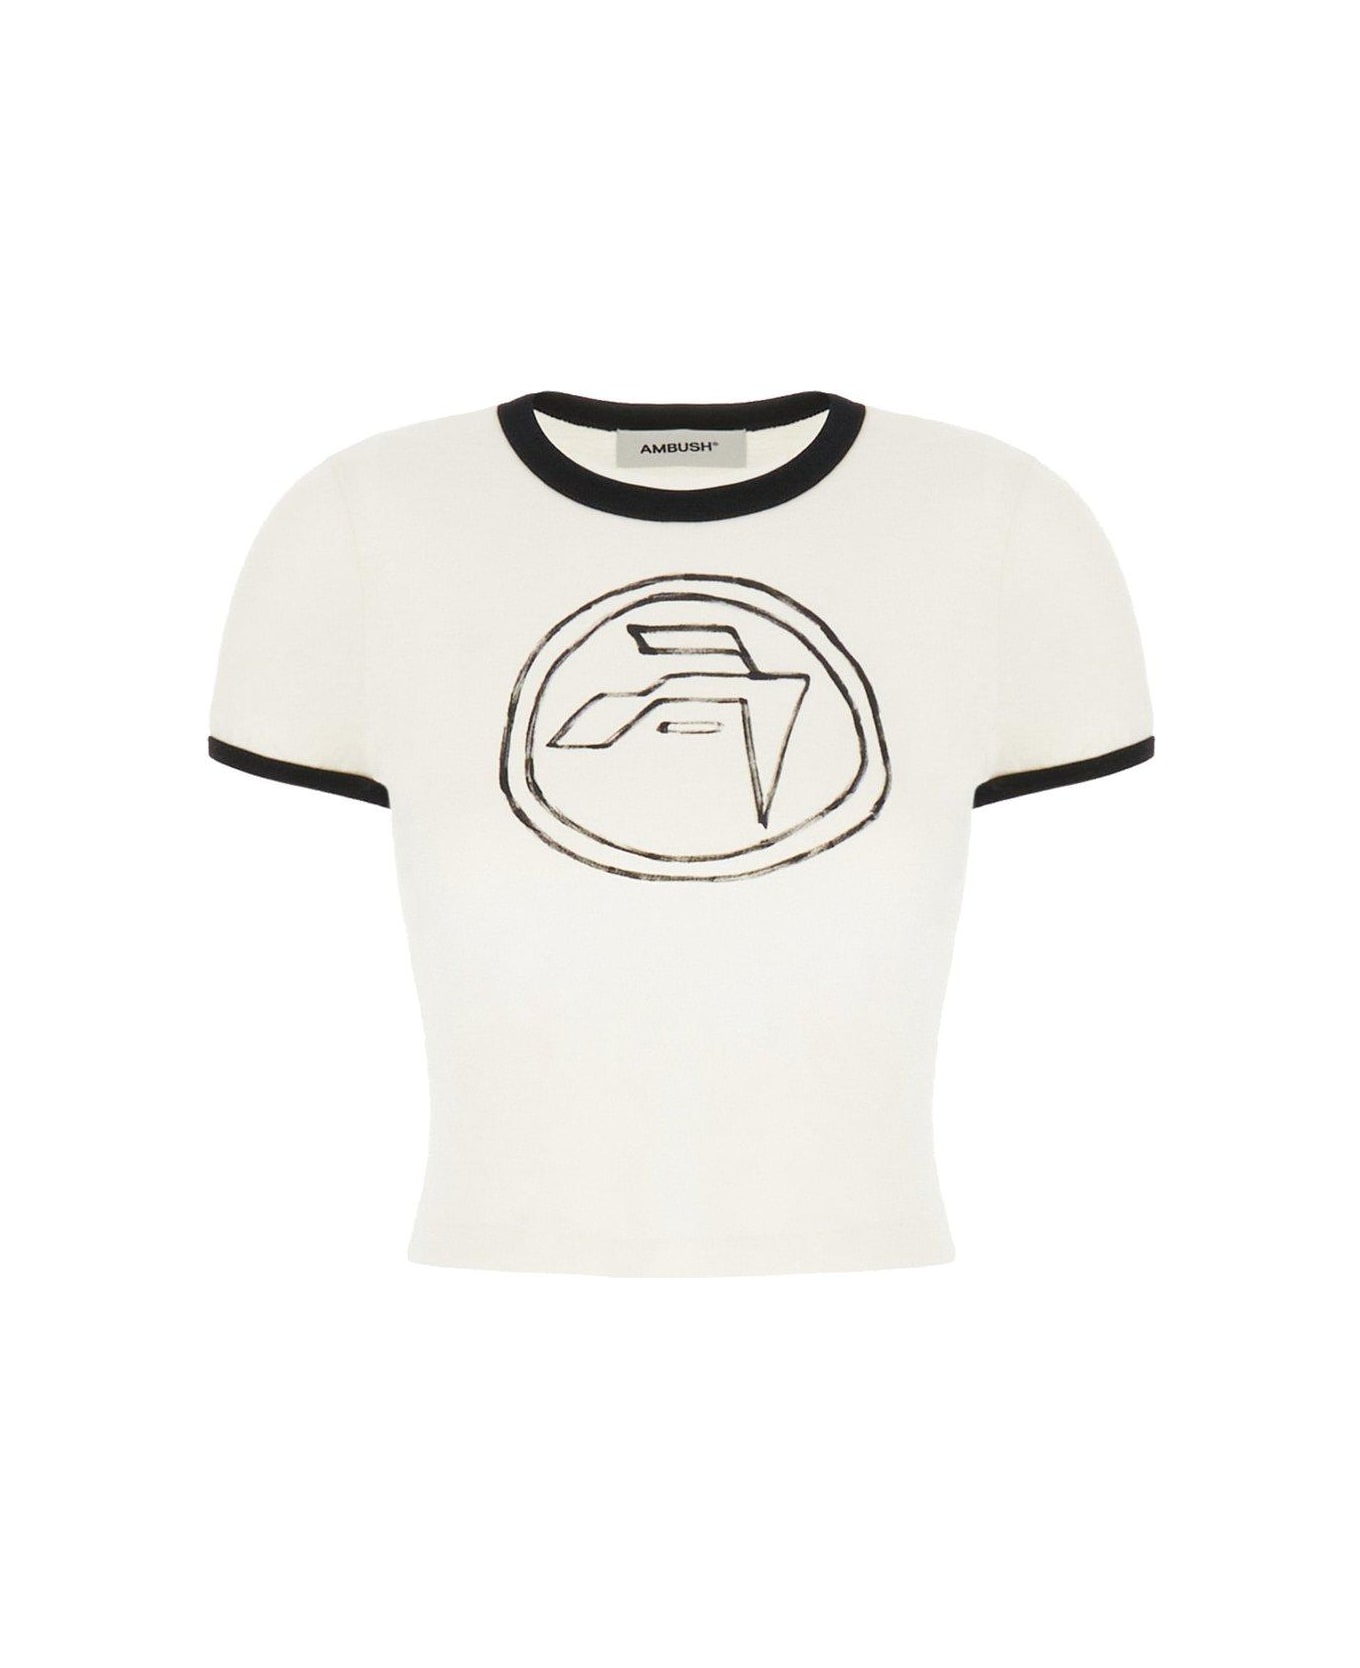 AMBUSH Hand Drawn Emblem Baby T-shirt - Tecnologias Calvin klein Box T-Shirt